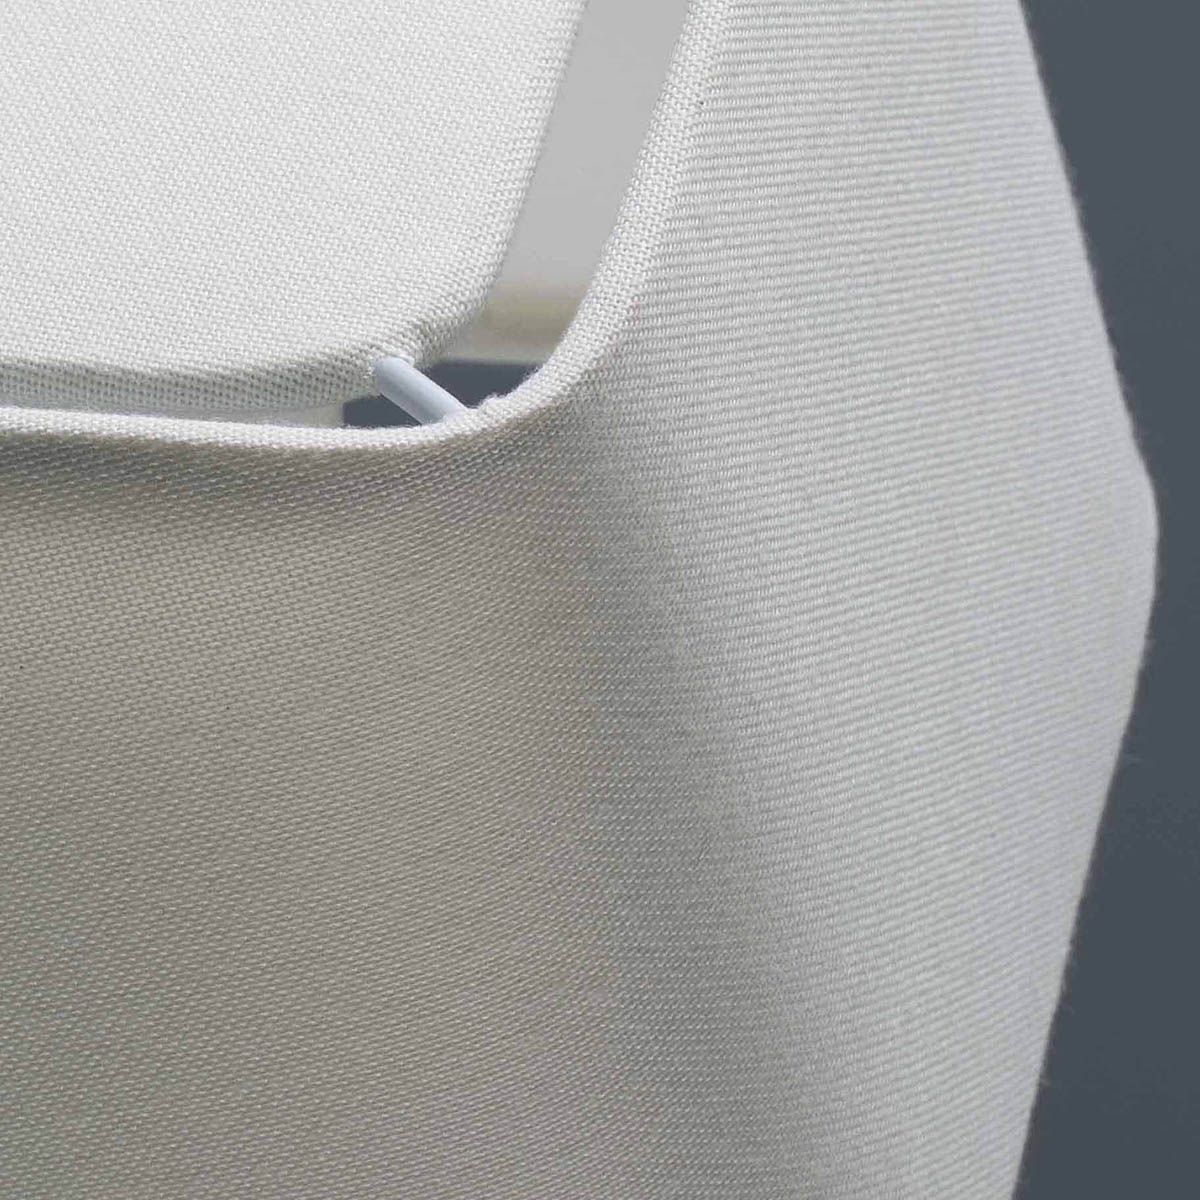 FARO - Applique moderne SWEET blanche en tissu et métal